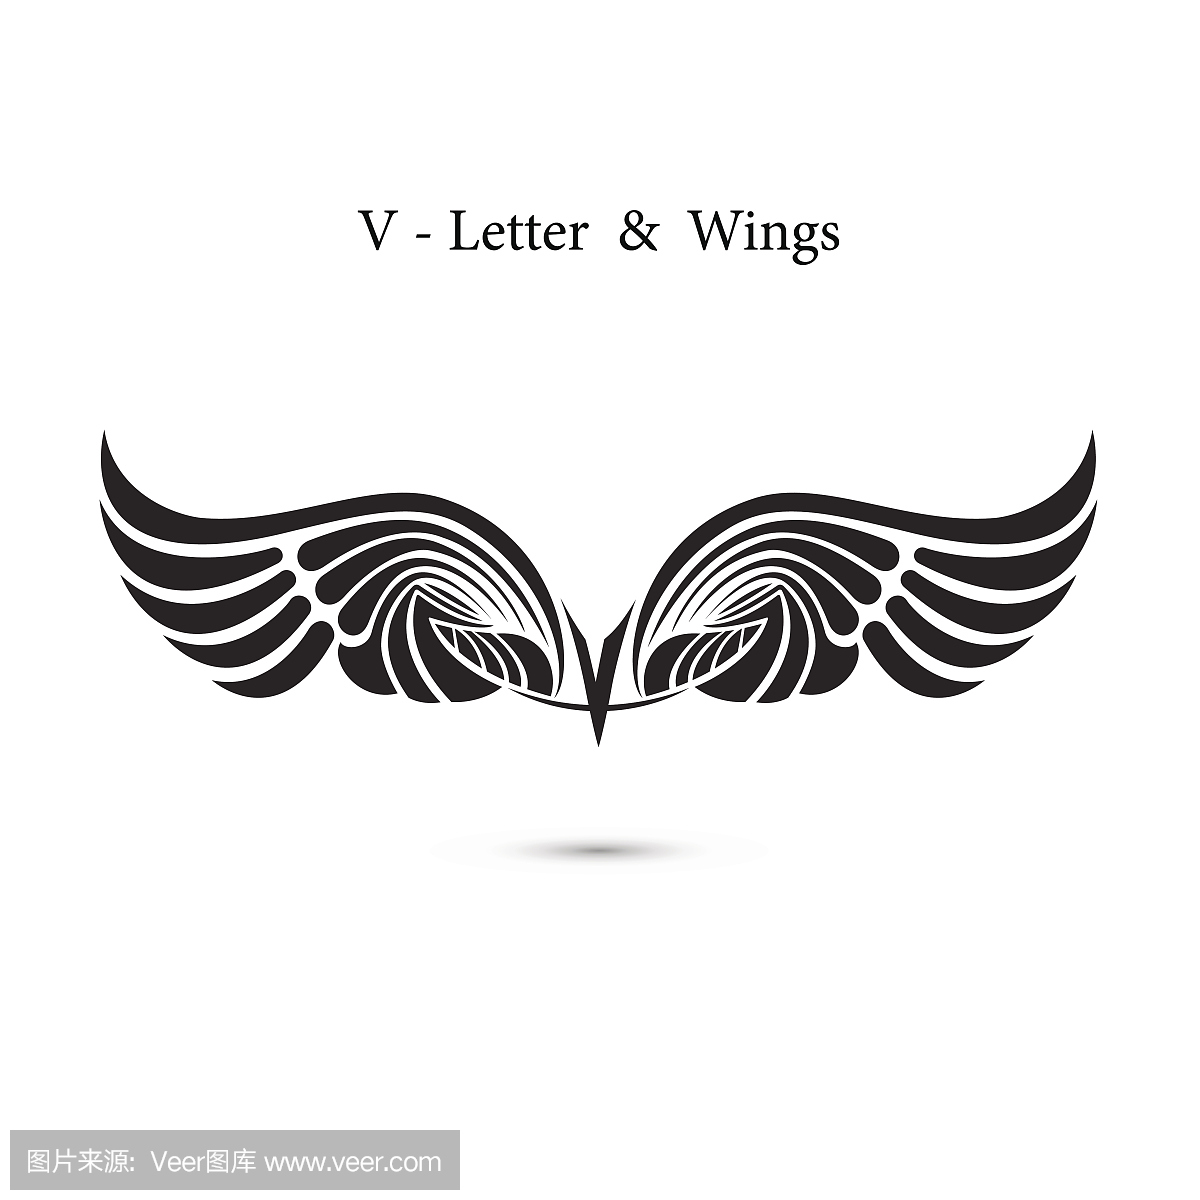 V字符号和天使翼。唱片翼图标。古典象征。有